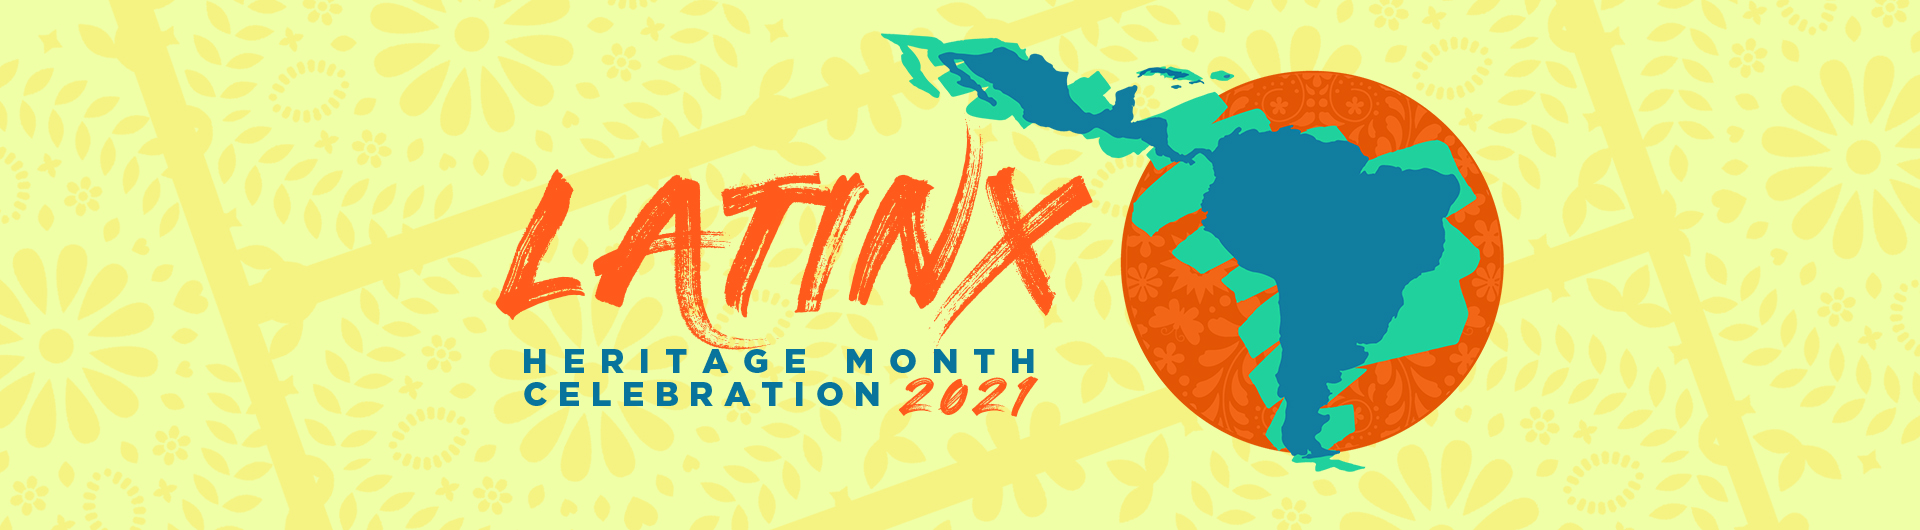 Latinx Heritage Month Celebration 2021